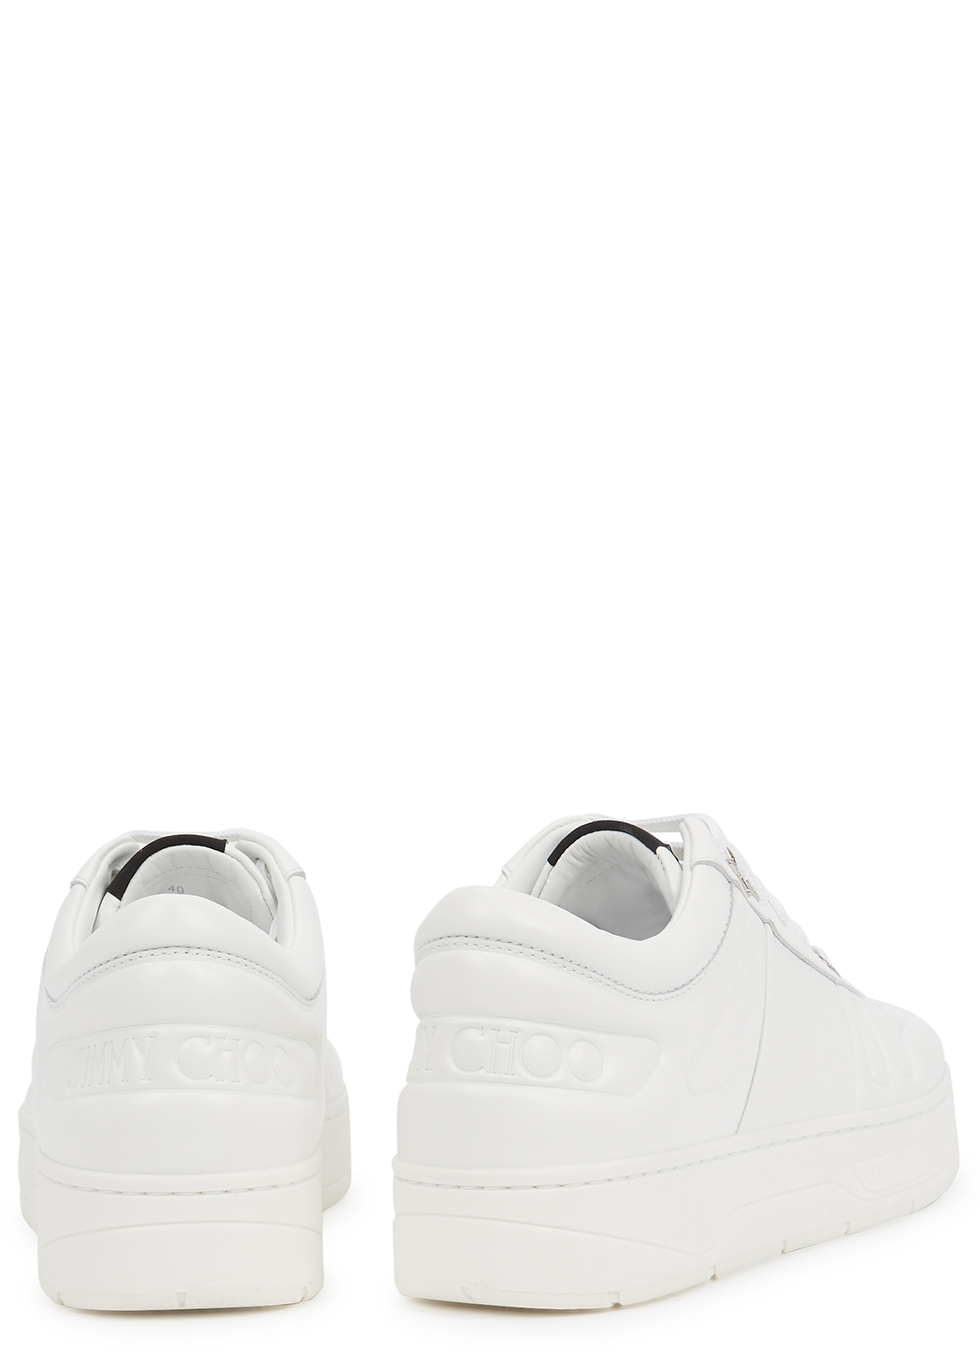 Jimmy Choo Hawaii/F white leather sneakers - Harvey Nichols